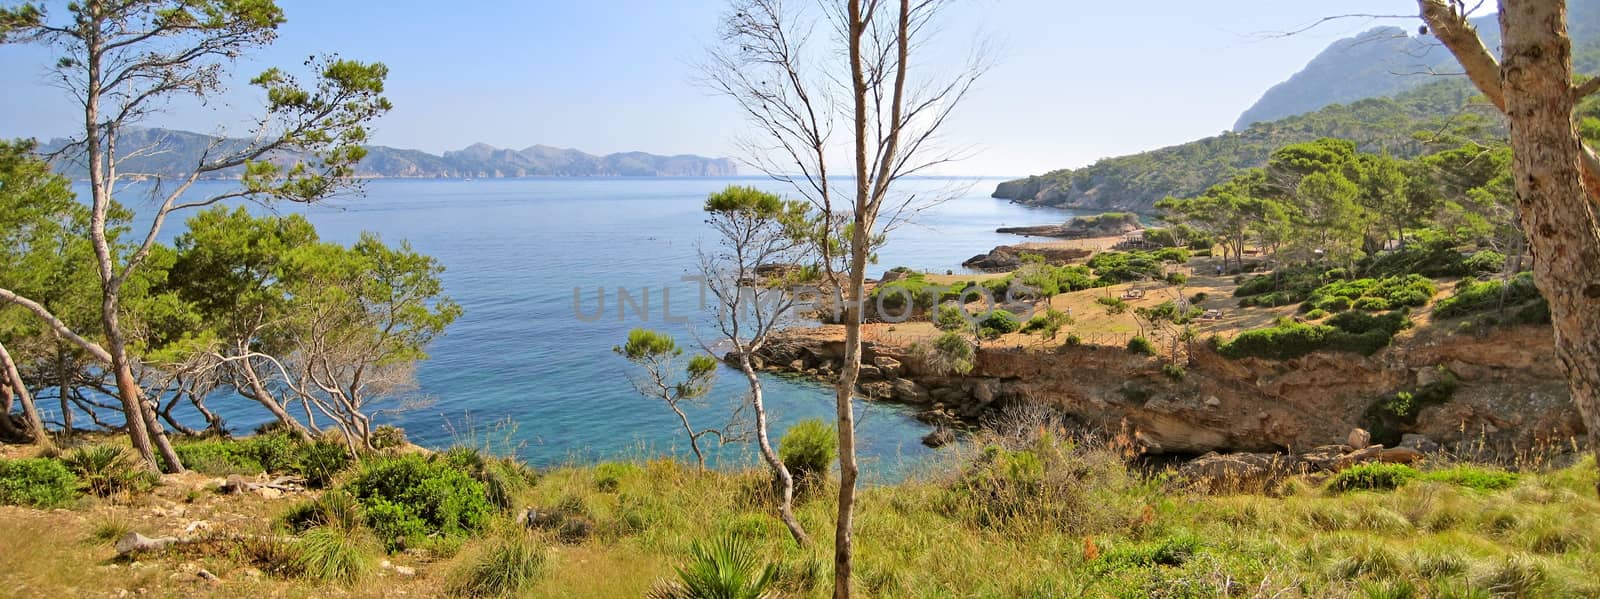 Formentor peninsula - north coast of Majorca by aldorado